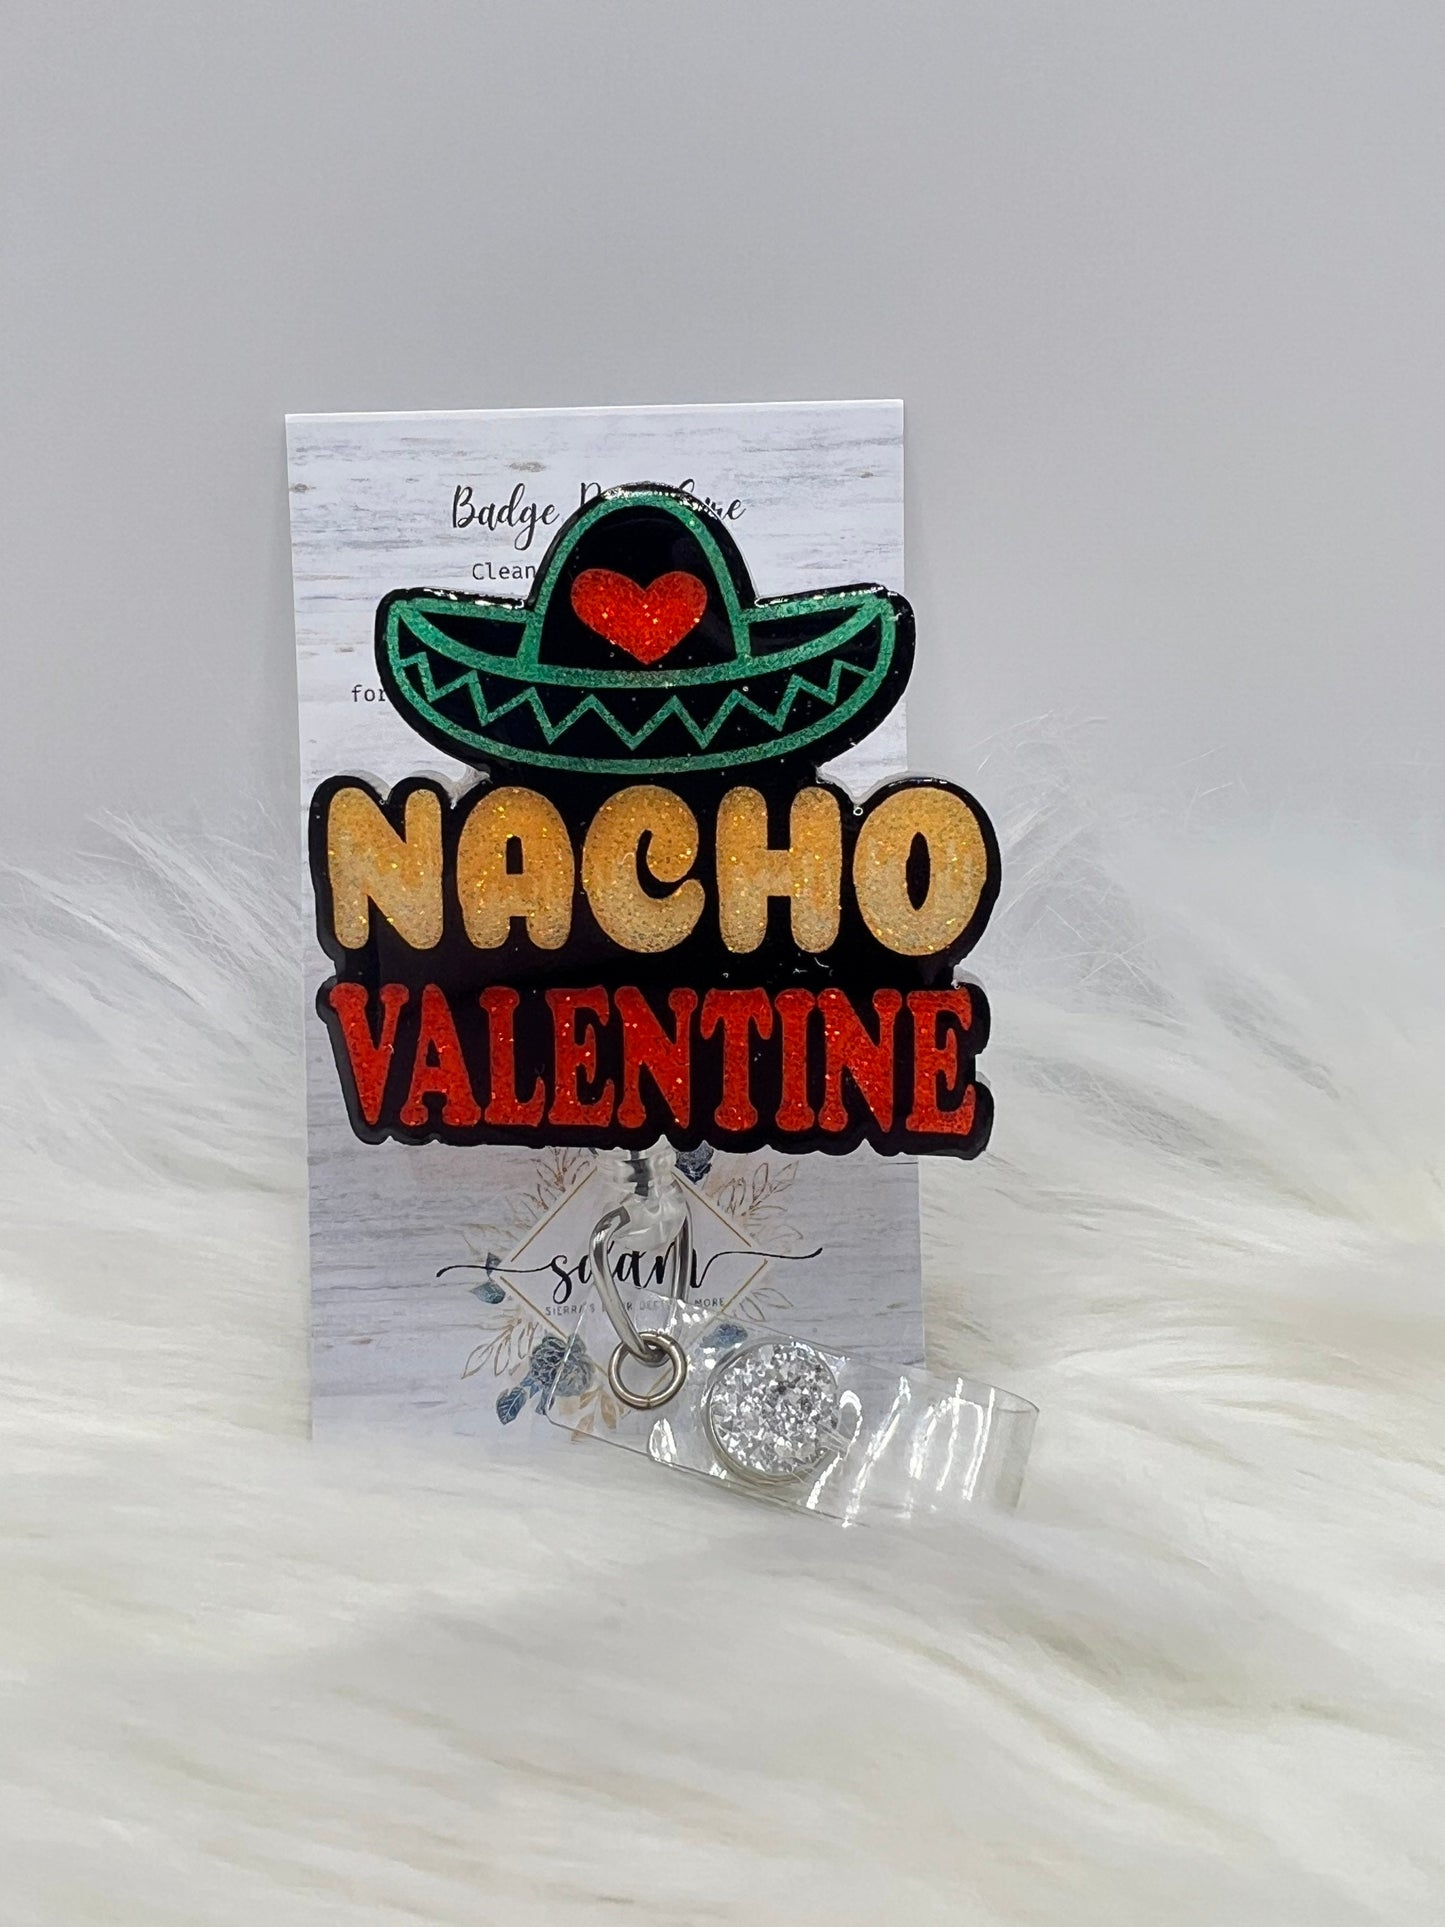 Nacho valentines badge reel- funny badge- Valentine’s Day badge- mri safe- lanyard- gifts for her